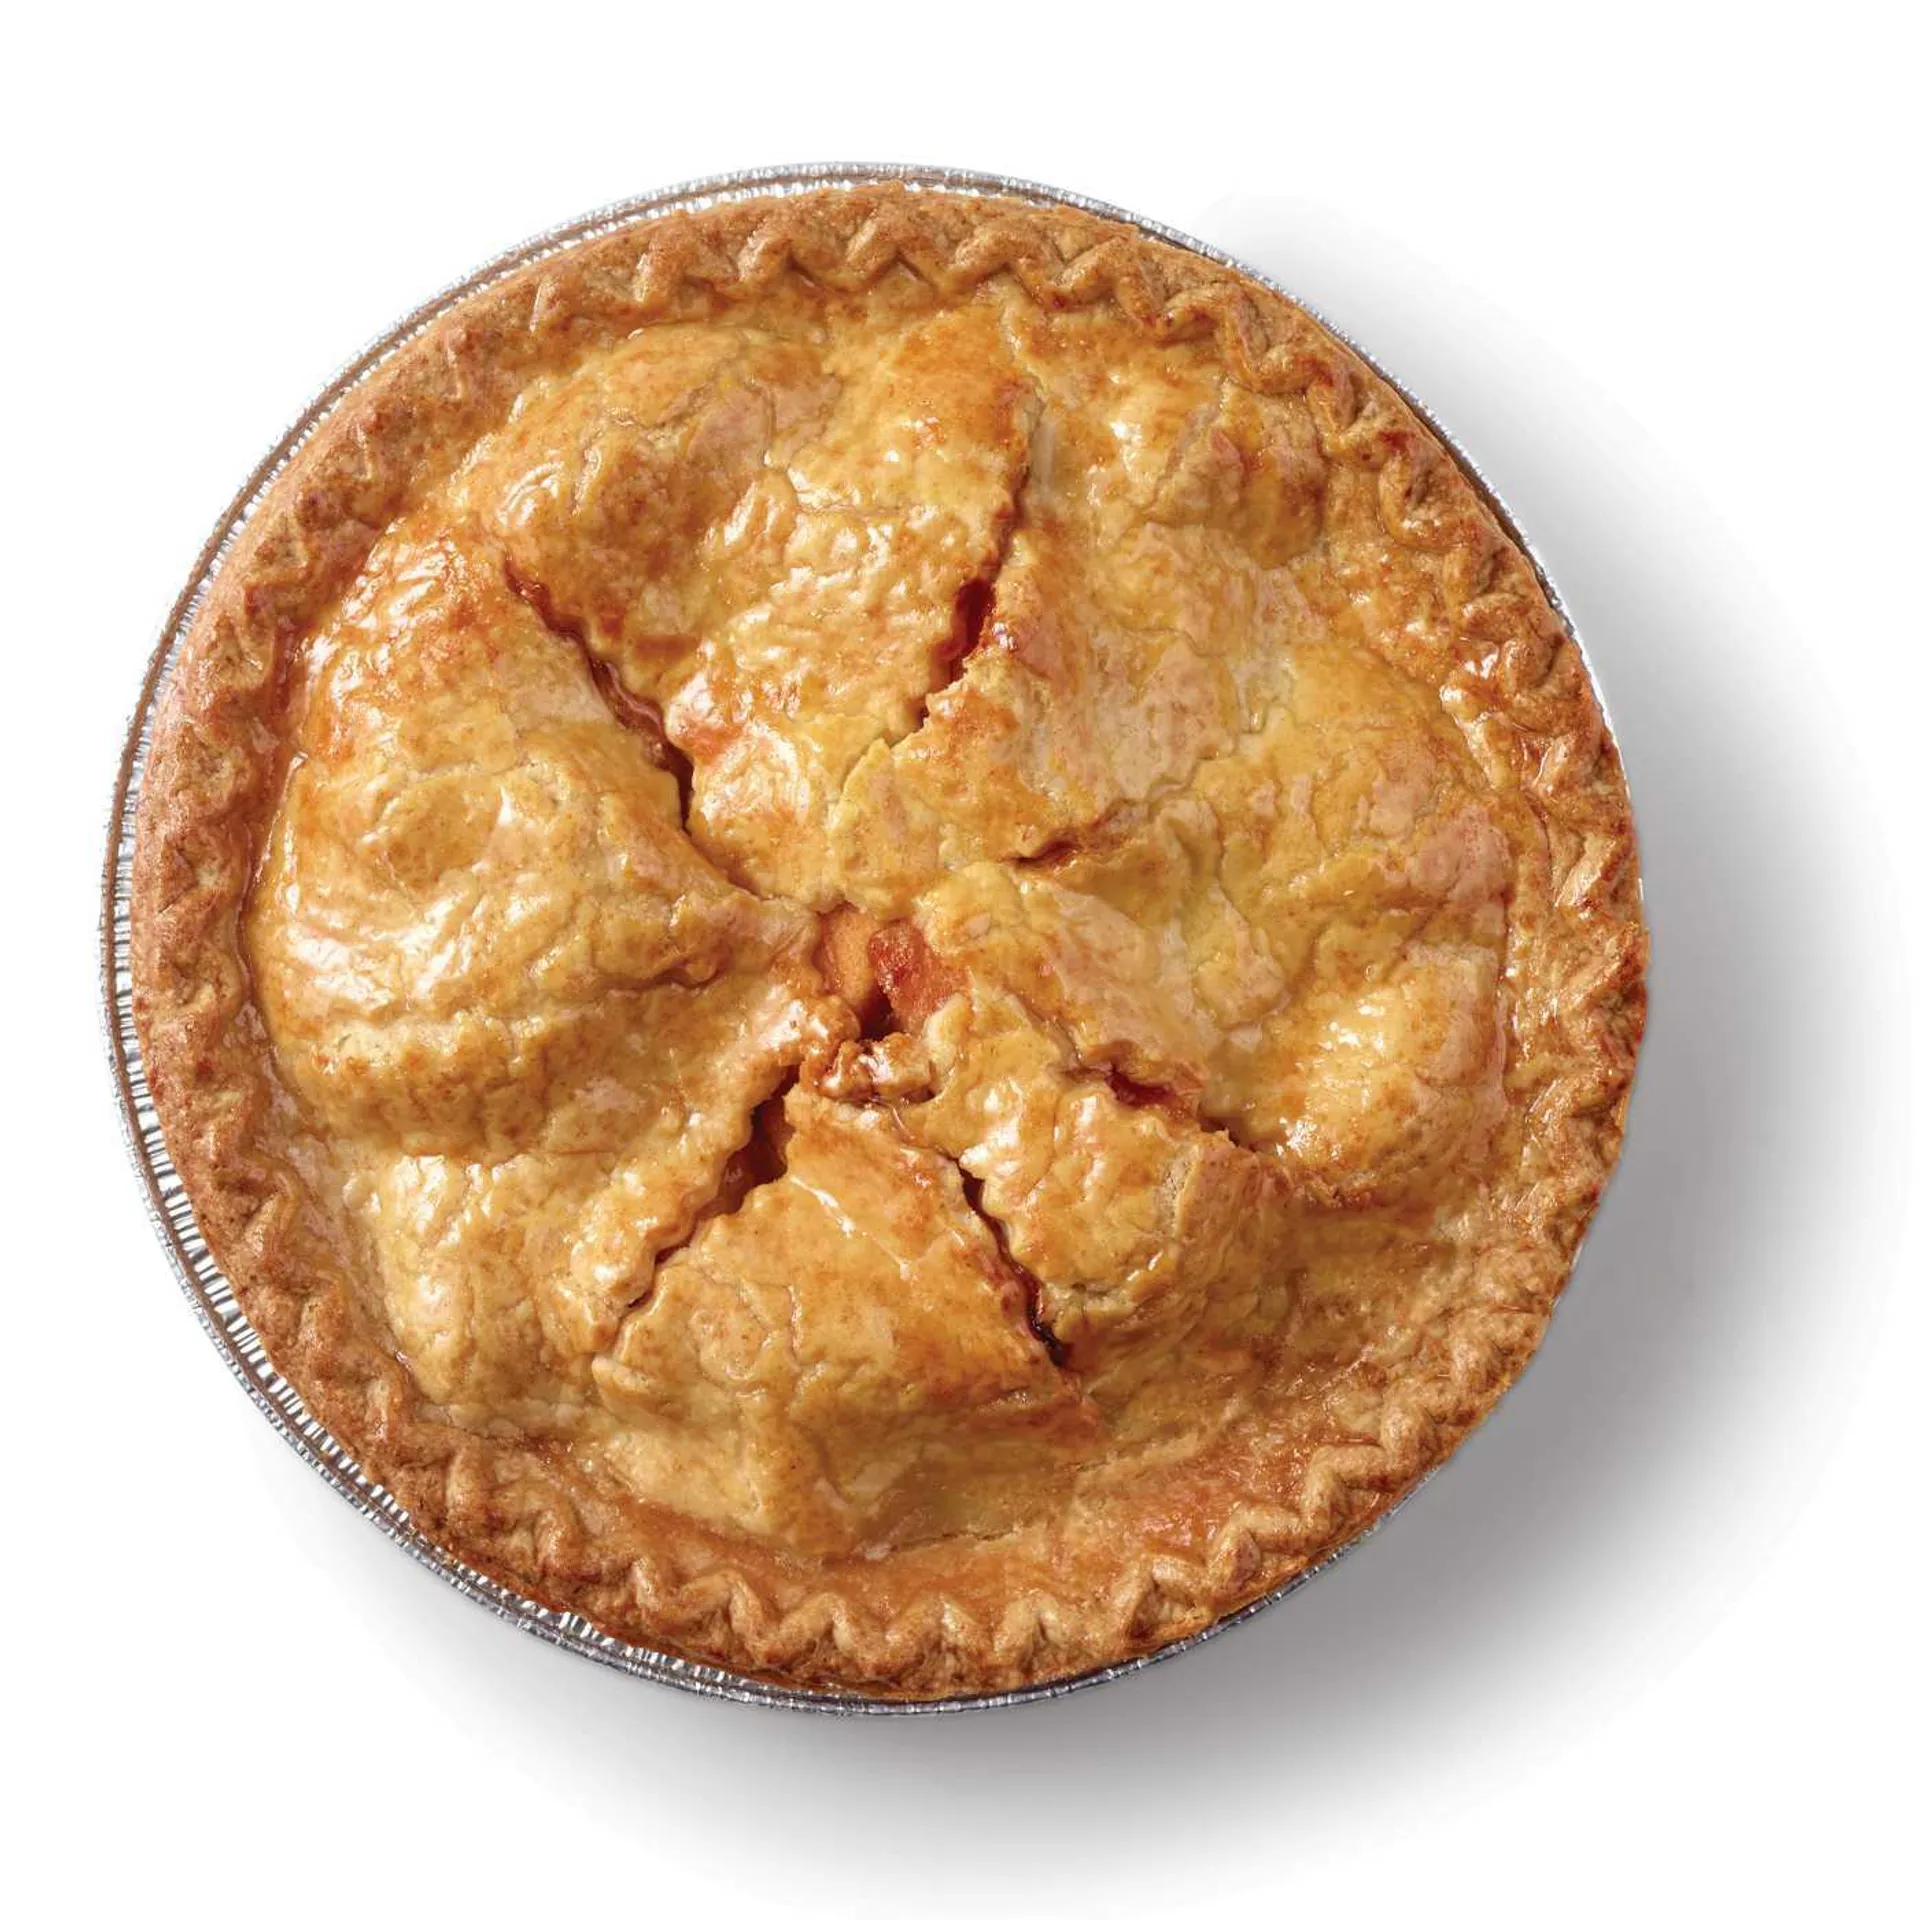 H‑E‑B Bakery Cinnamon Apple Pie